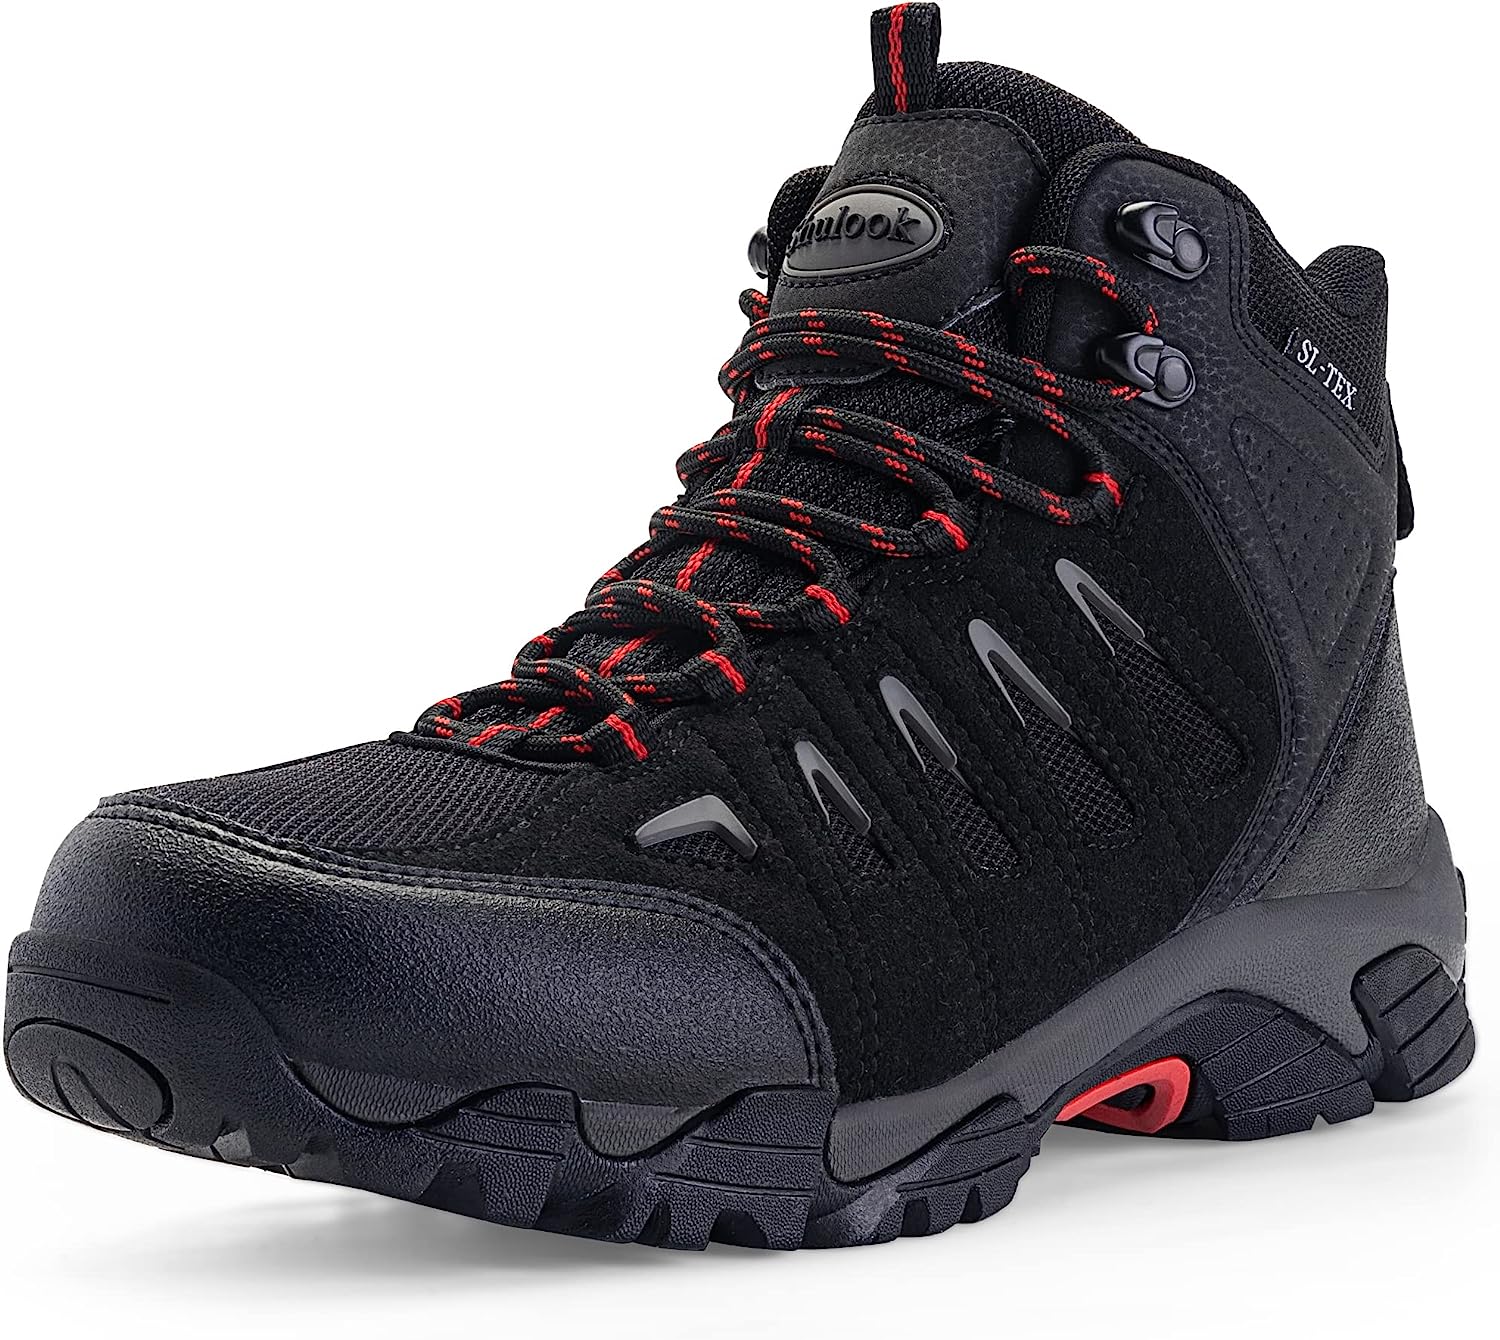 SHULOOK Men's Waterproof Hiking Boots Non-Slip [...]